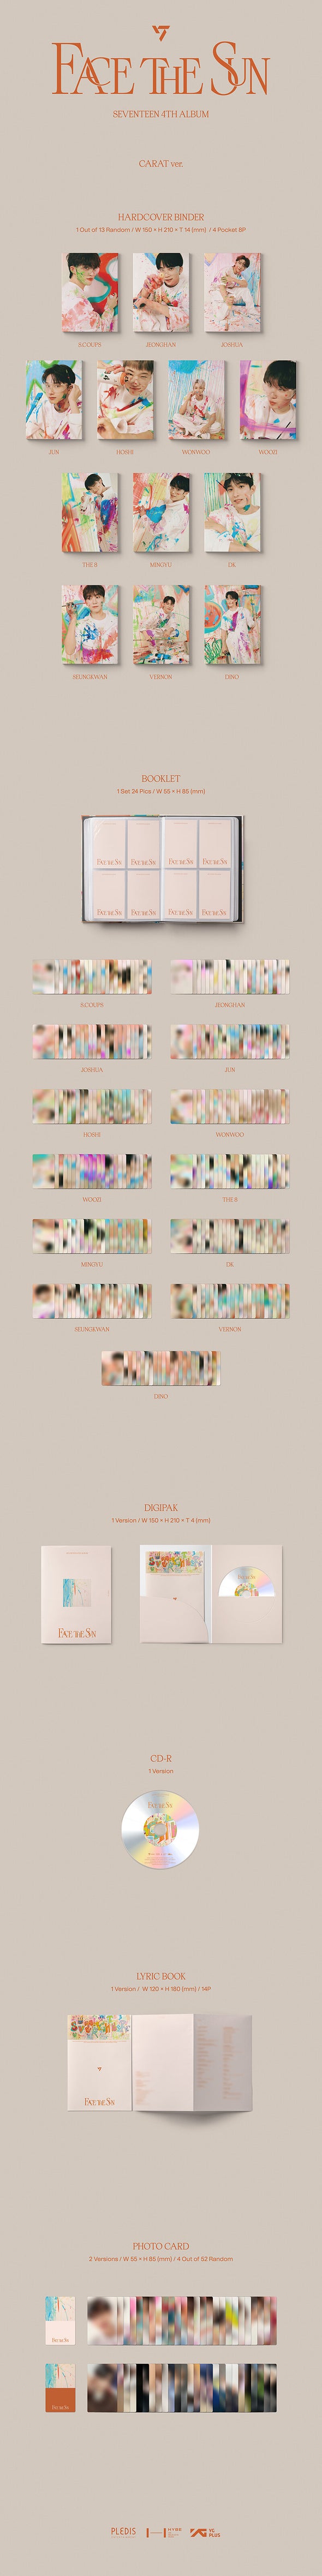 SEVENTEEN - Face The Sun 4th Mini Album (Carat Version)